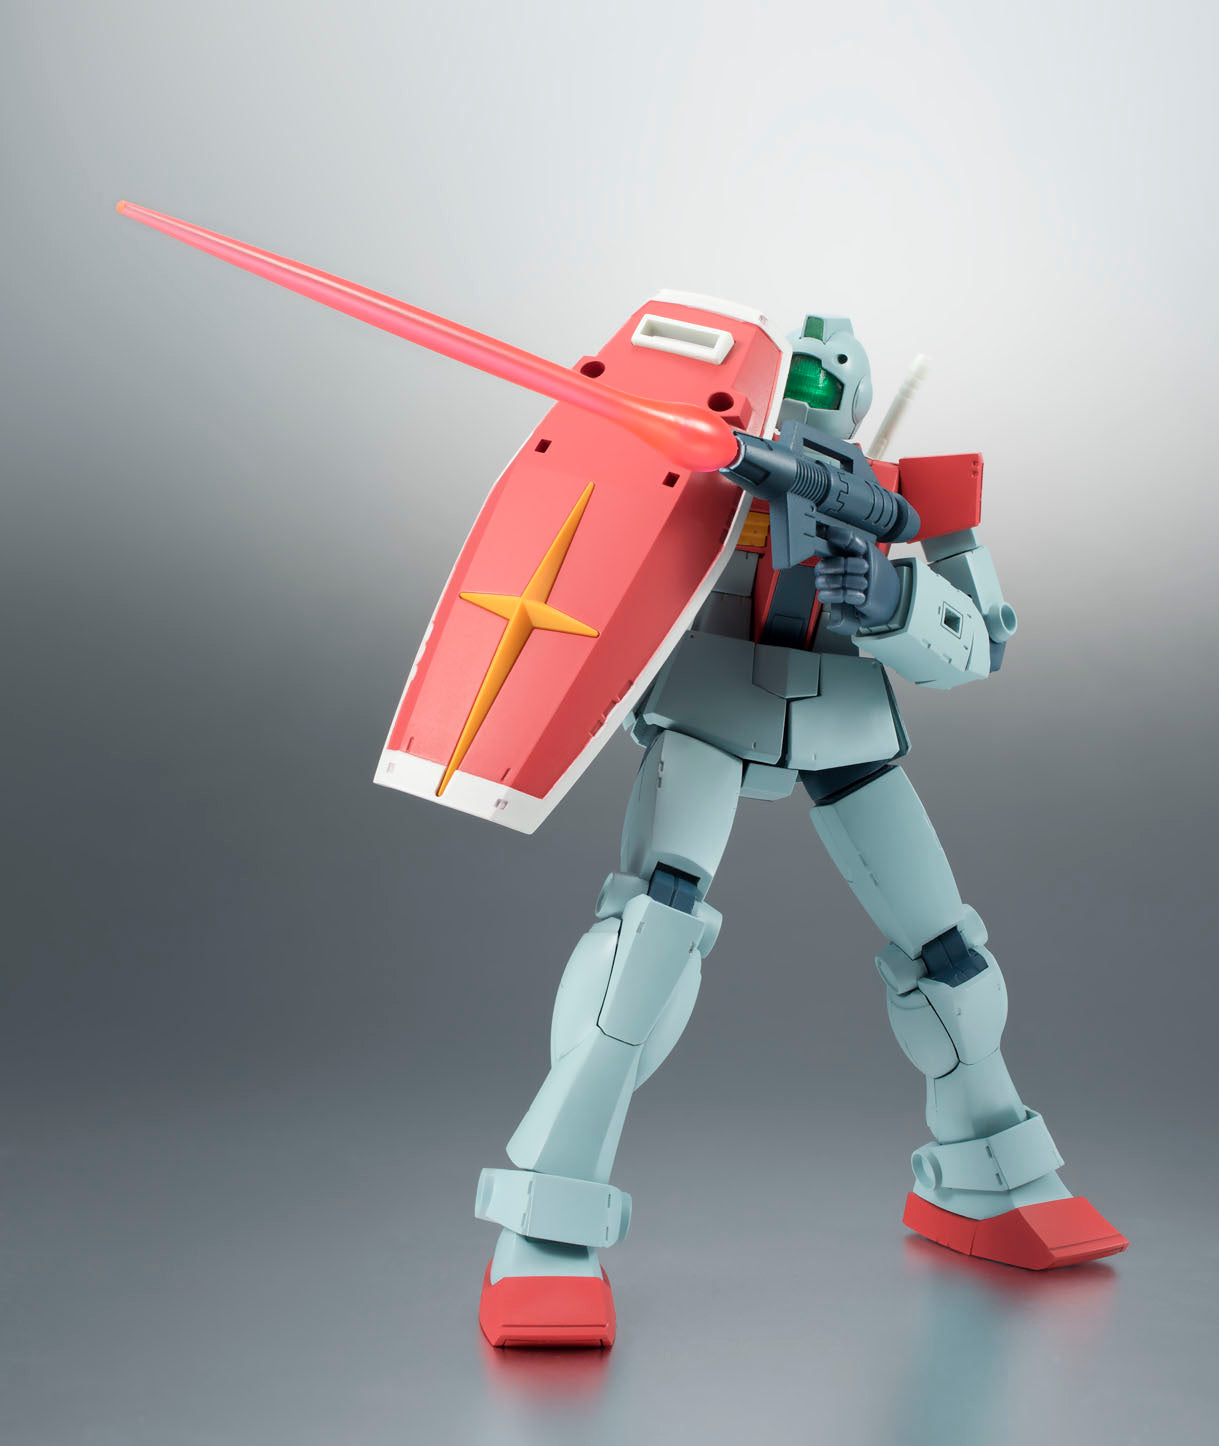 Bandai Spirits - Mobile Suit Gundam - RGM-79 GM Ver. A.N.I.M.E.